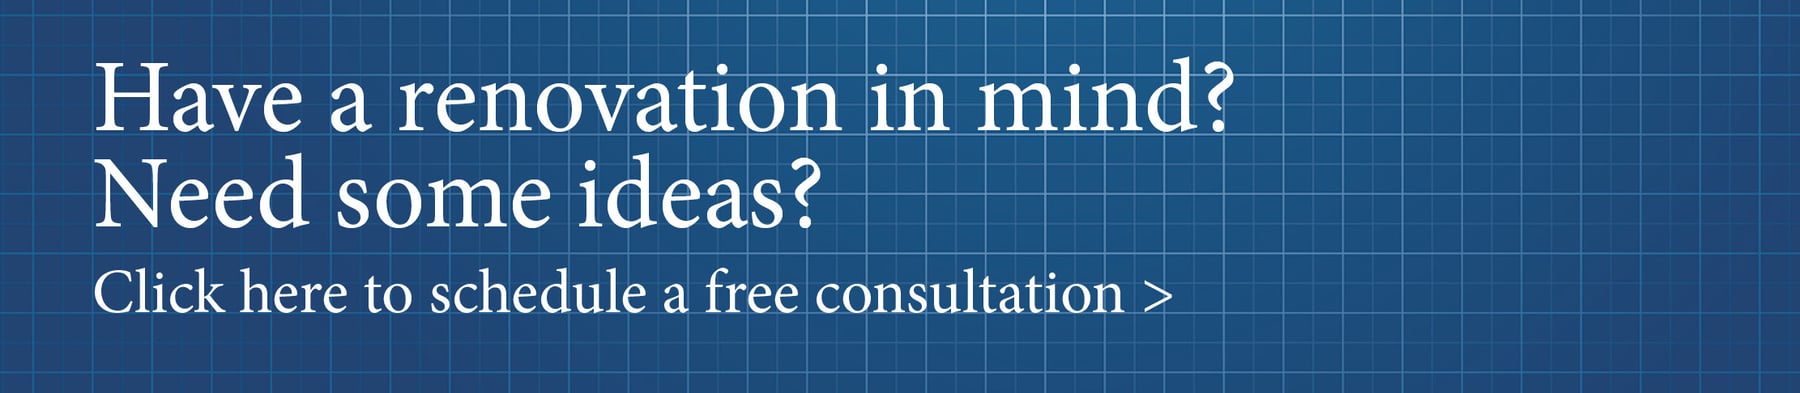 Free Consultation - Renovation  - Brindley Construction